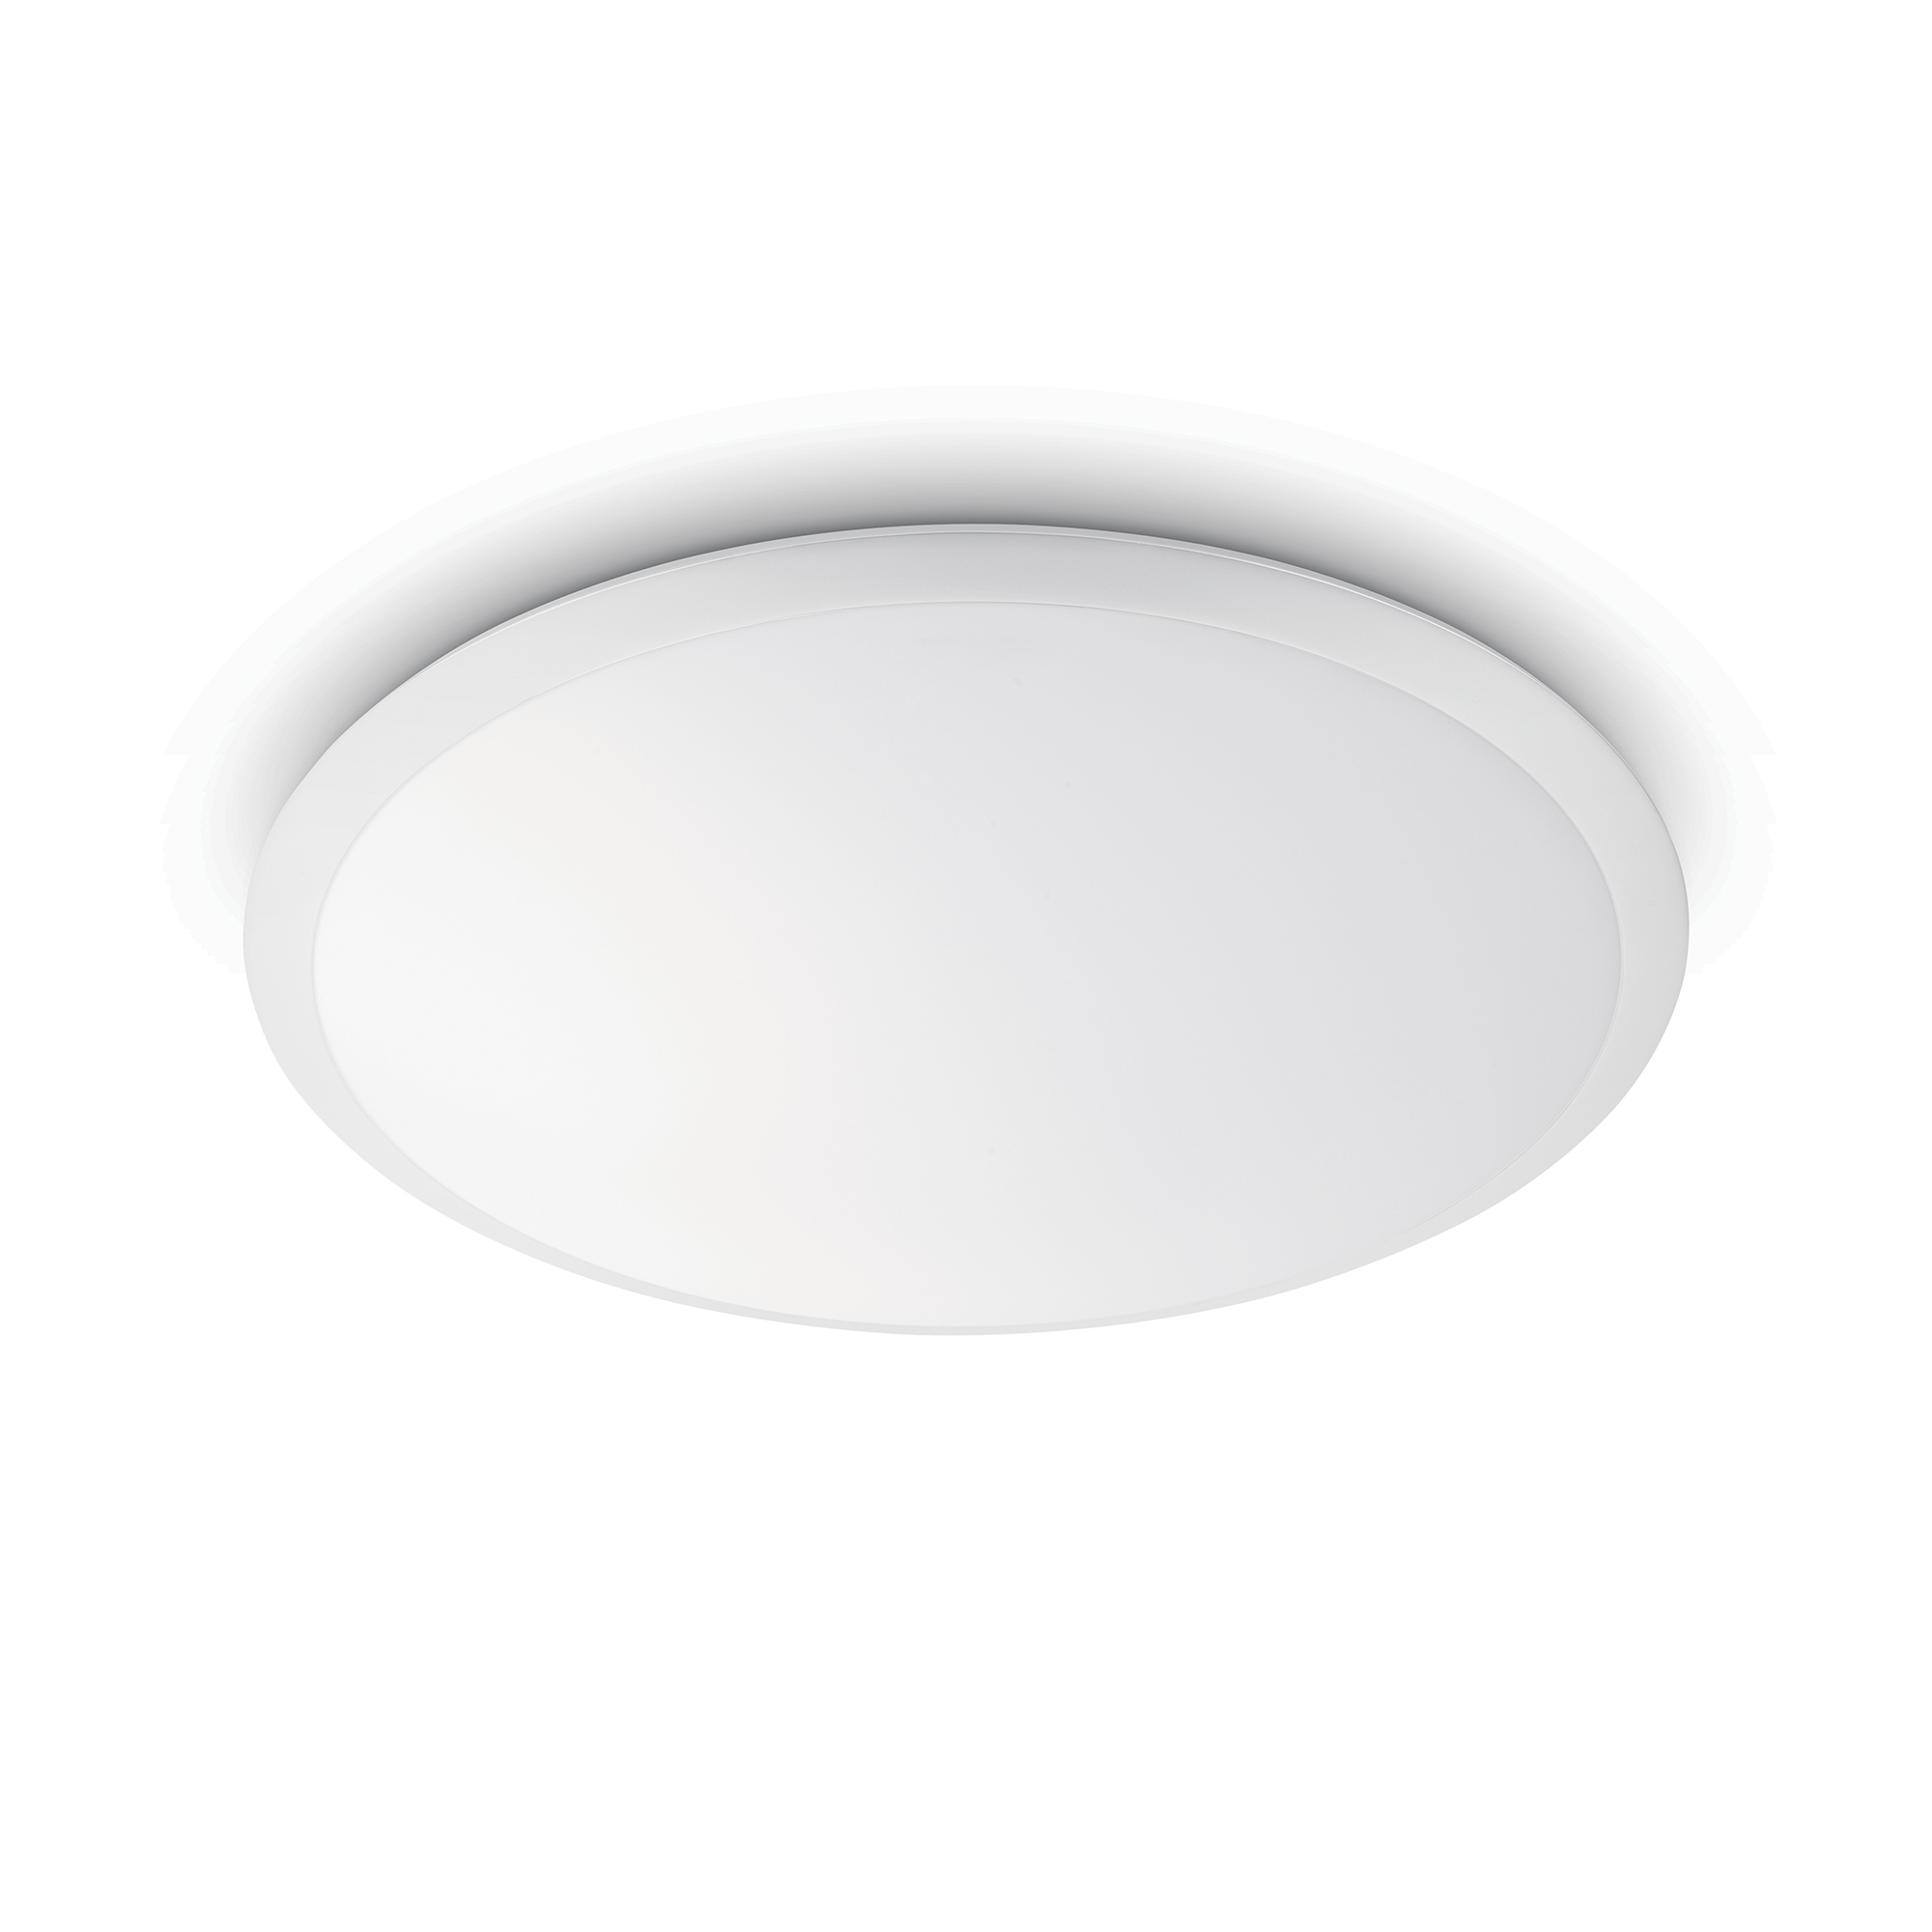 Philips myLiving LED ceiling light Wawel white 48cm 3200lm 36W